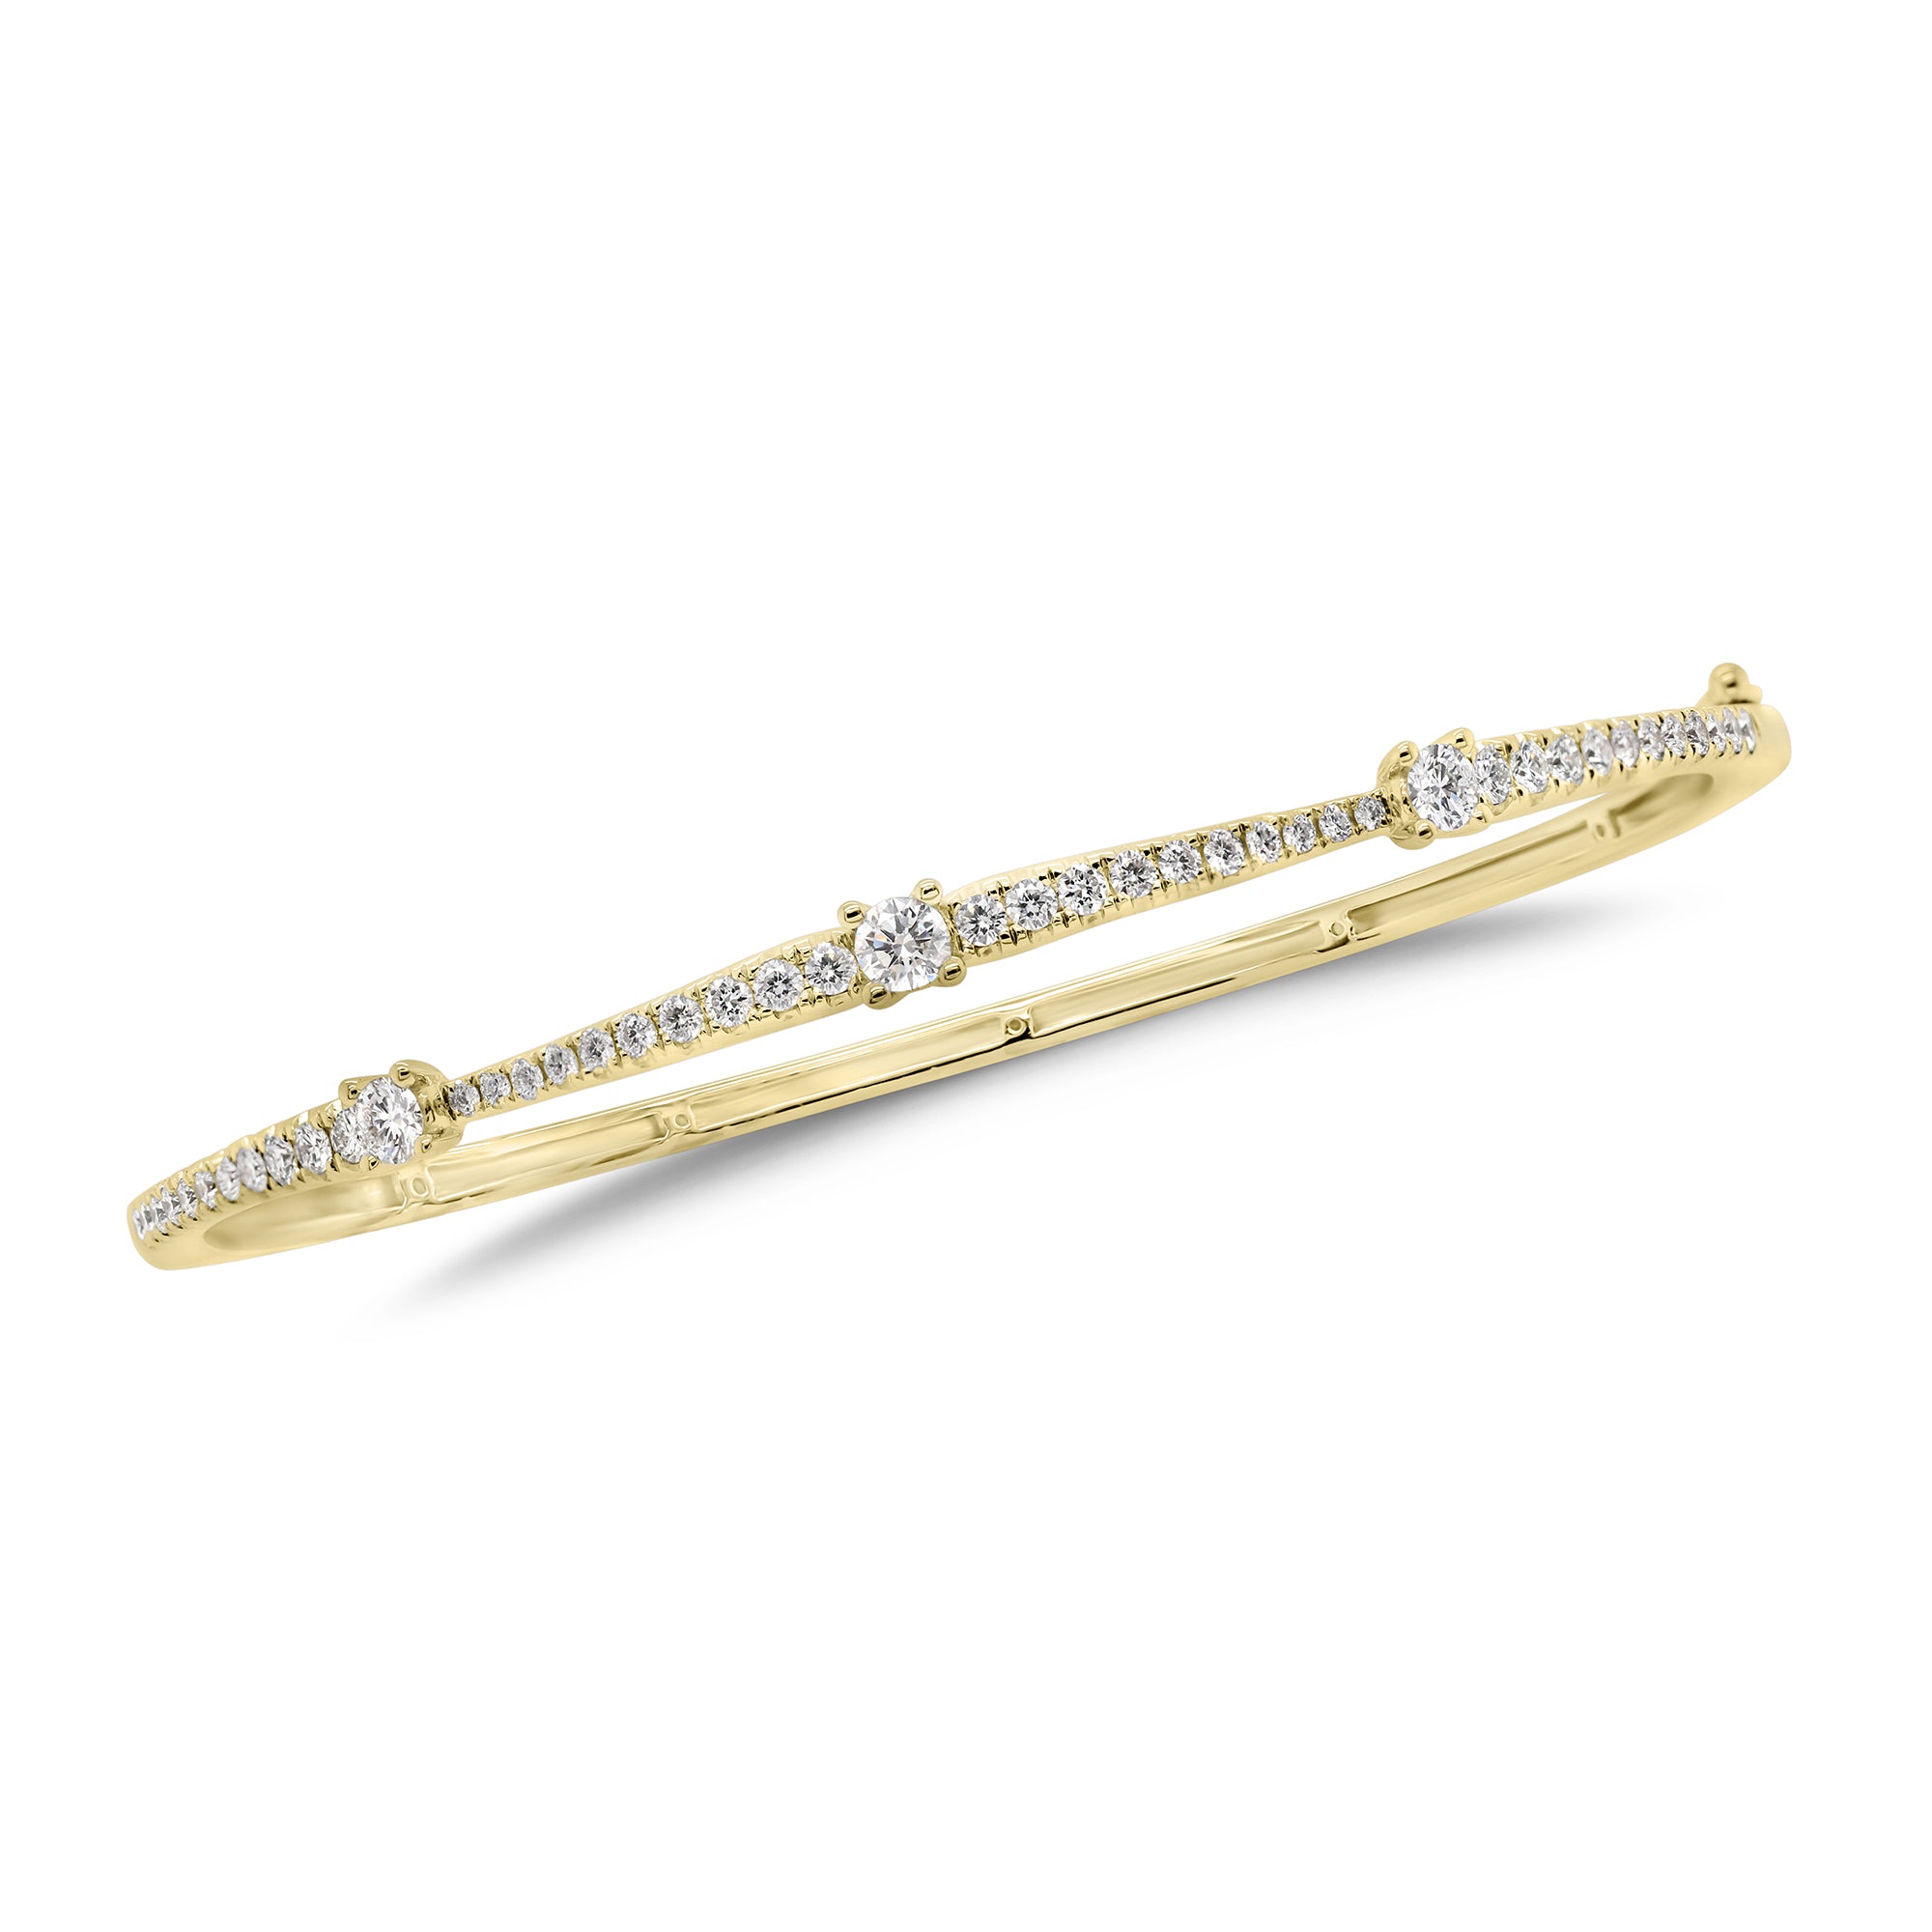 Diamond Tapered Bangle Bracelet - 18K yellow gold weighing 11.09 grams - 45 round diamonds totaling 0.81 carats